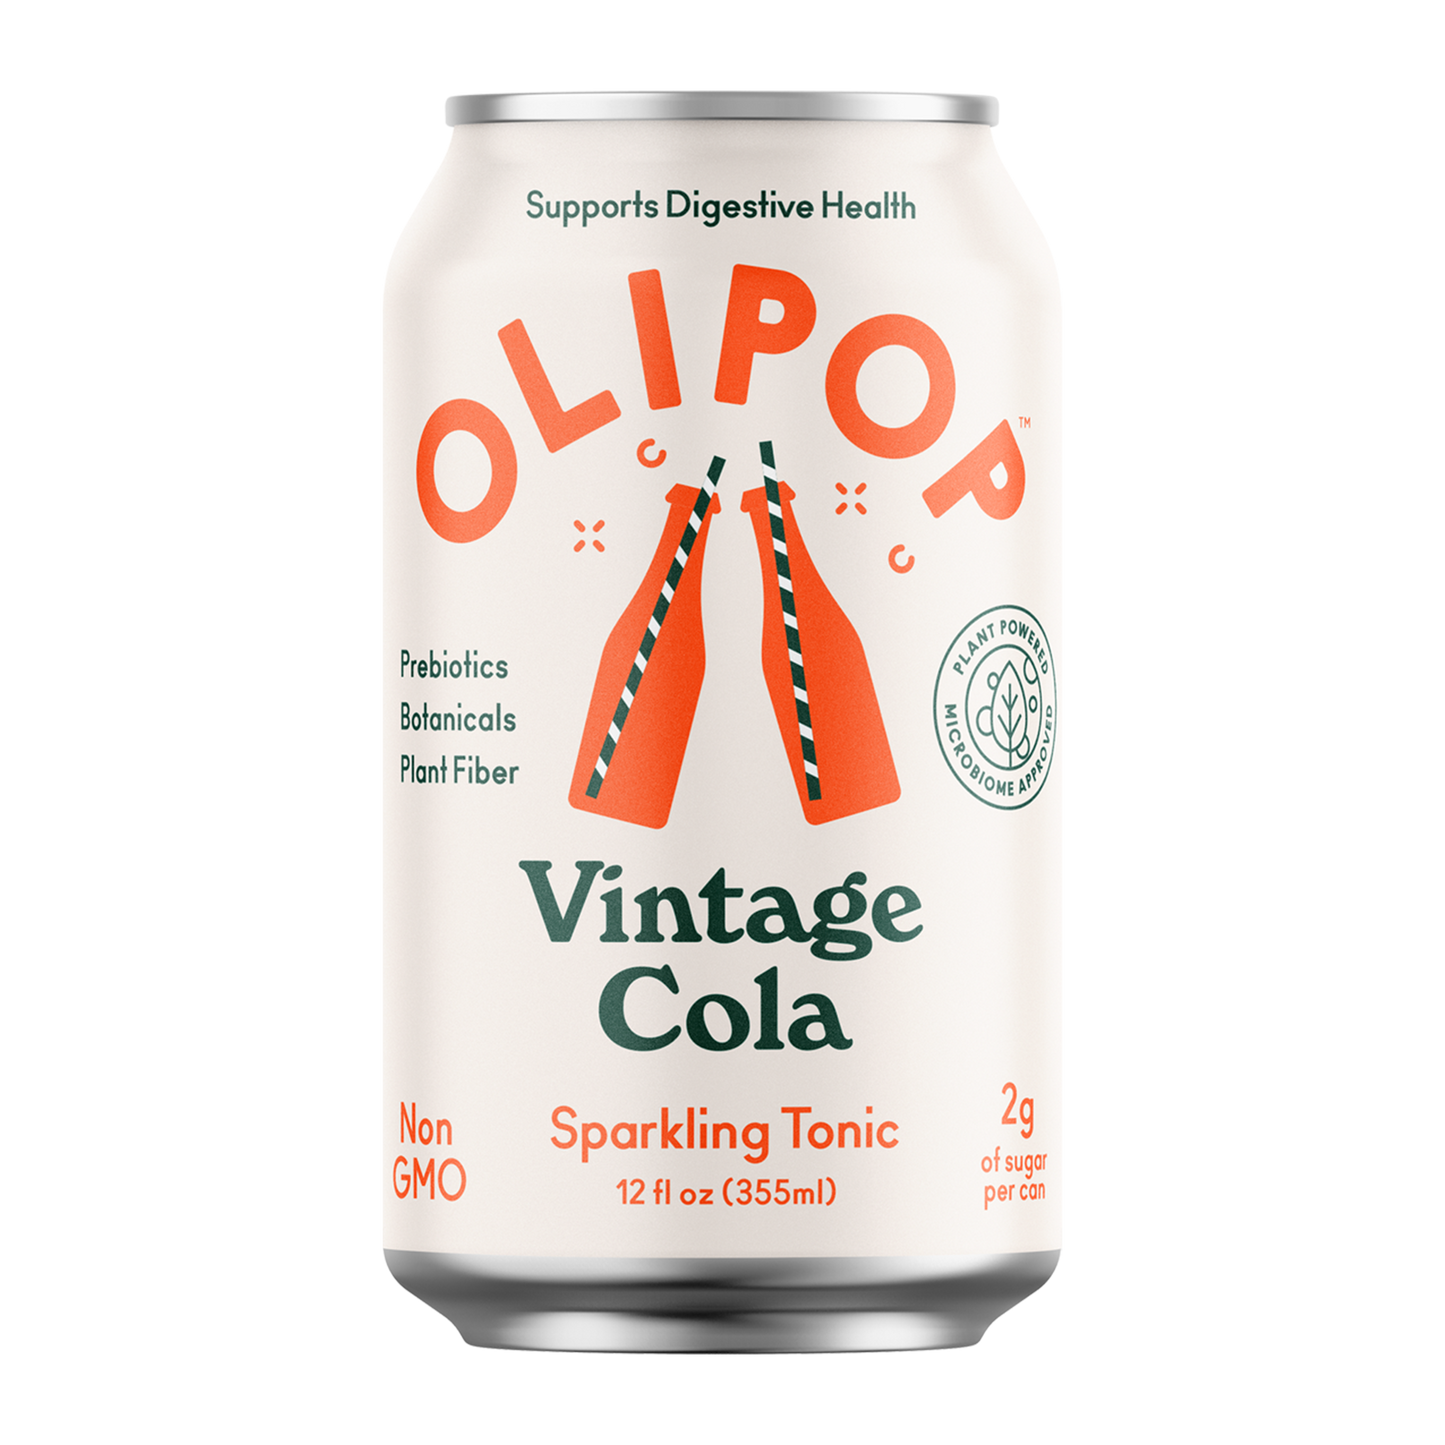 OLIPOP, Vintage Cola Sparkling Tonic 12oz (Chill)